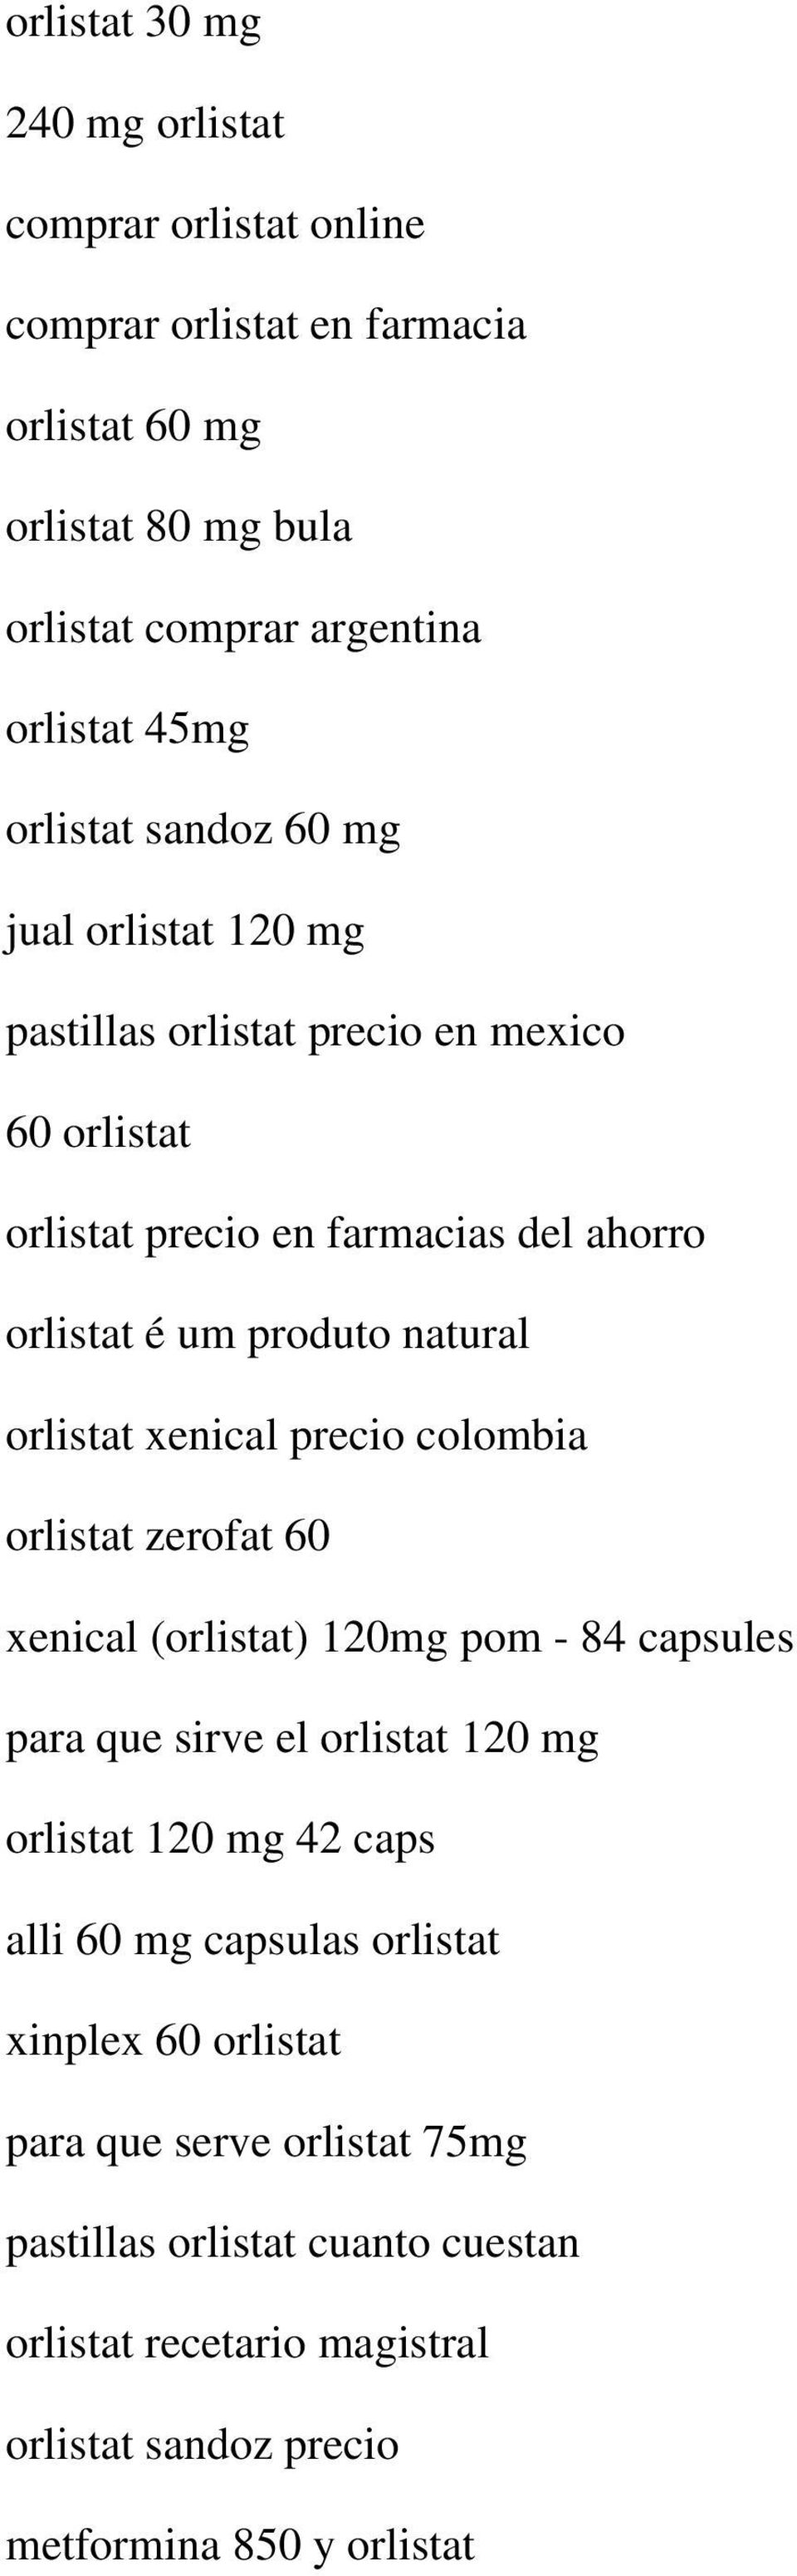 orlistat xenical precio colombia orlistat zerofat 60 xenical (orlistat) 120mg pom - 84 capsules para que sirve el orlistat 120 mg orlistat 120 mg 42 caps alli 60 mg